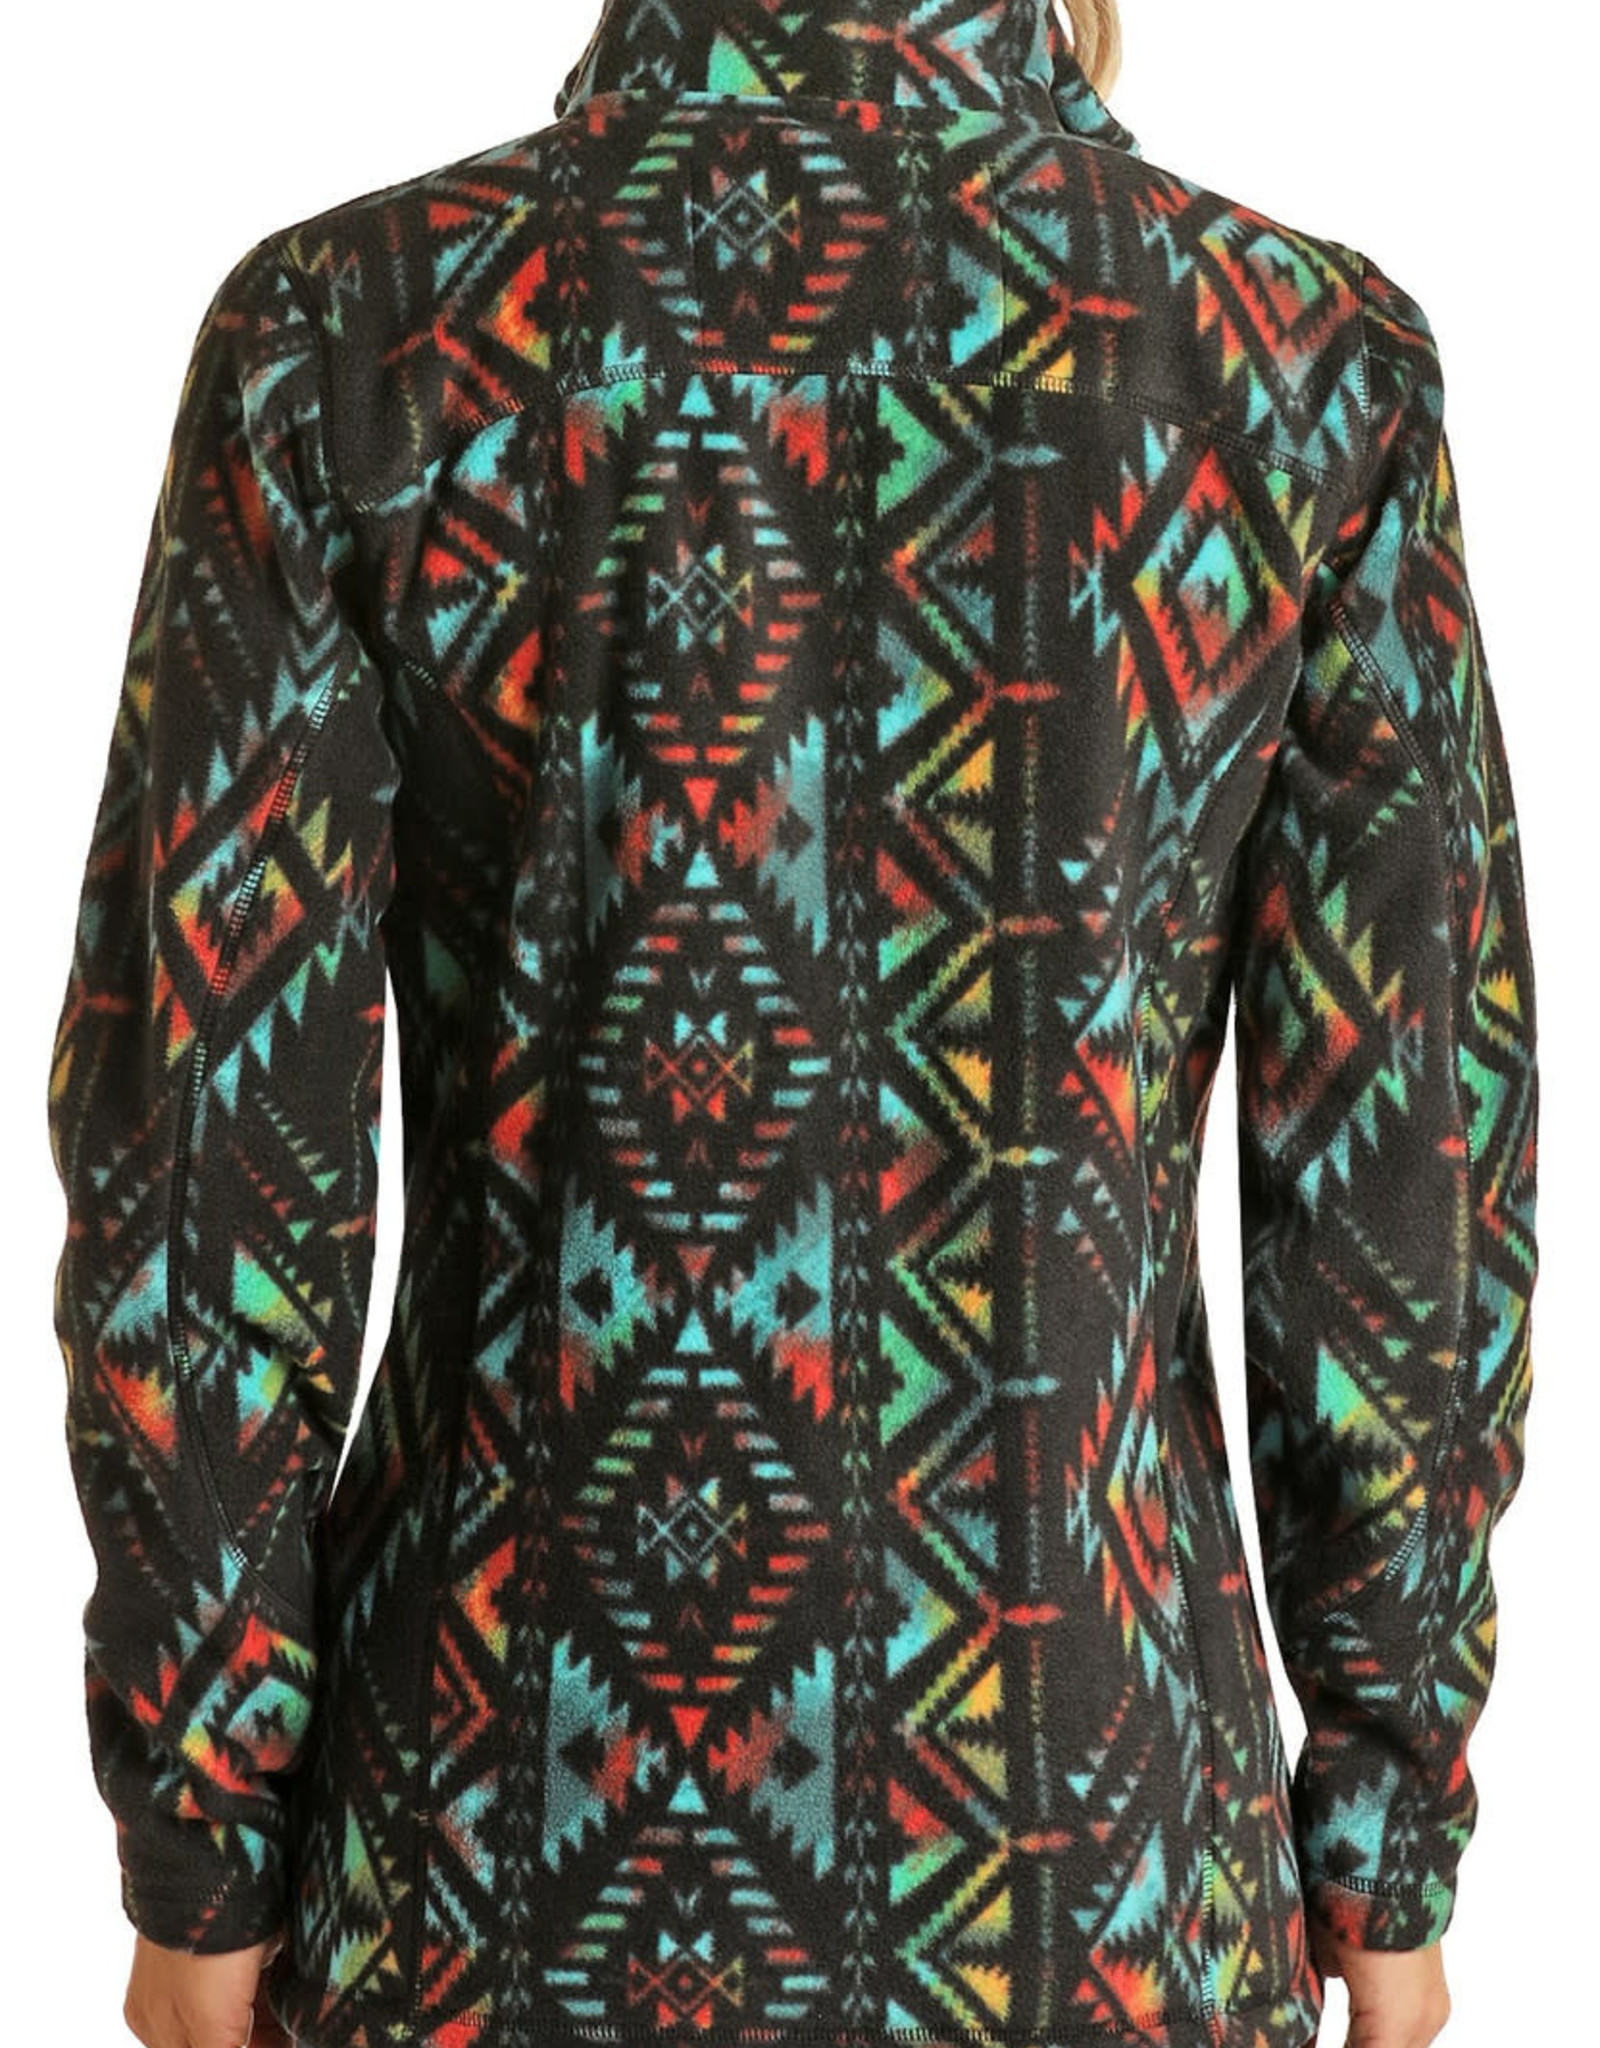 Womens Powder River Black Multi Color Aztec Full Zip Fleece Jacket